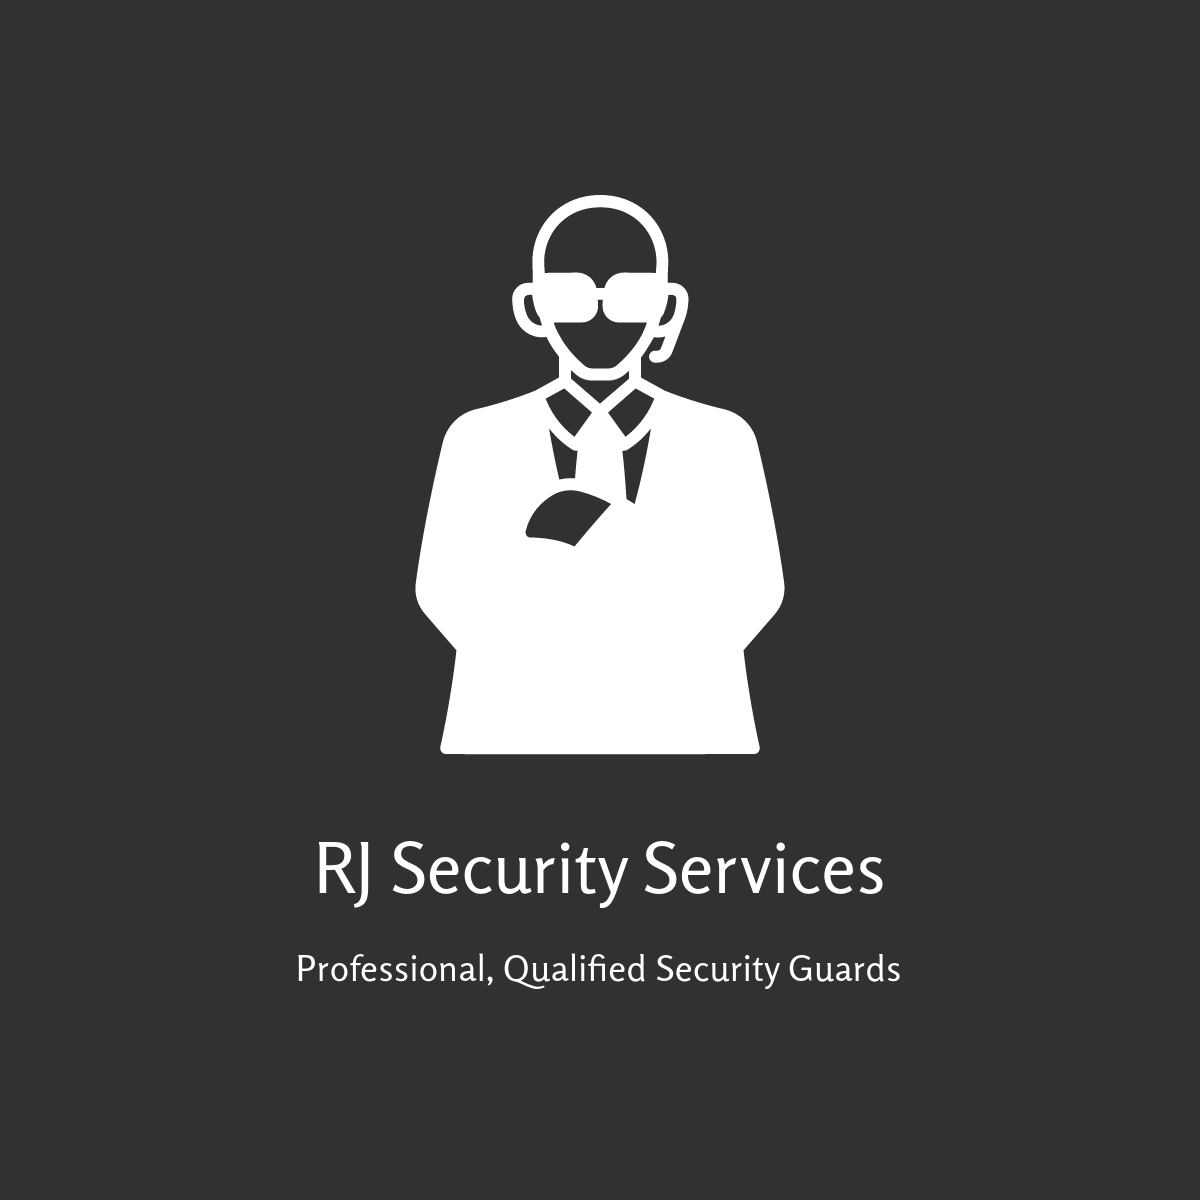 RJ Security Services